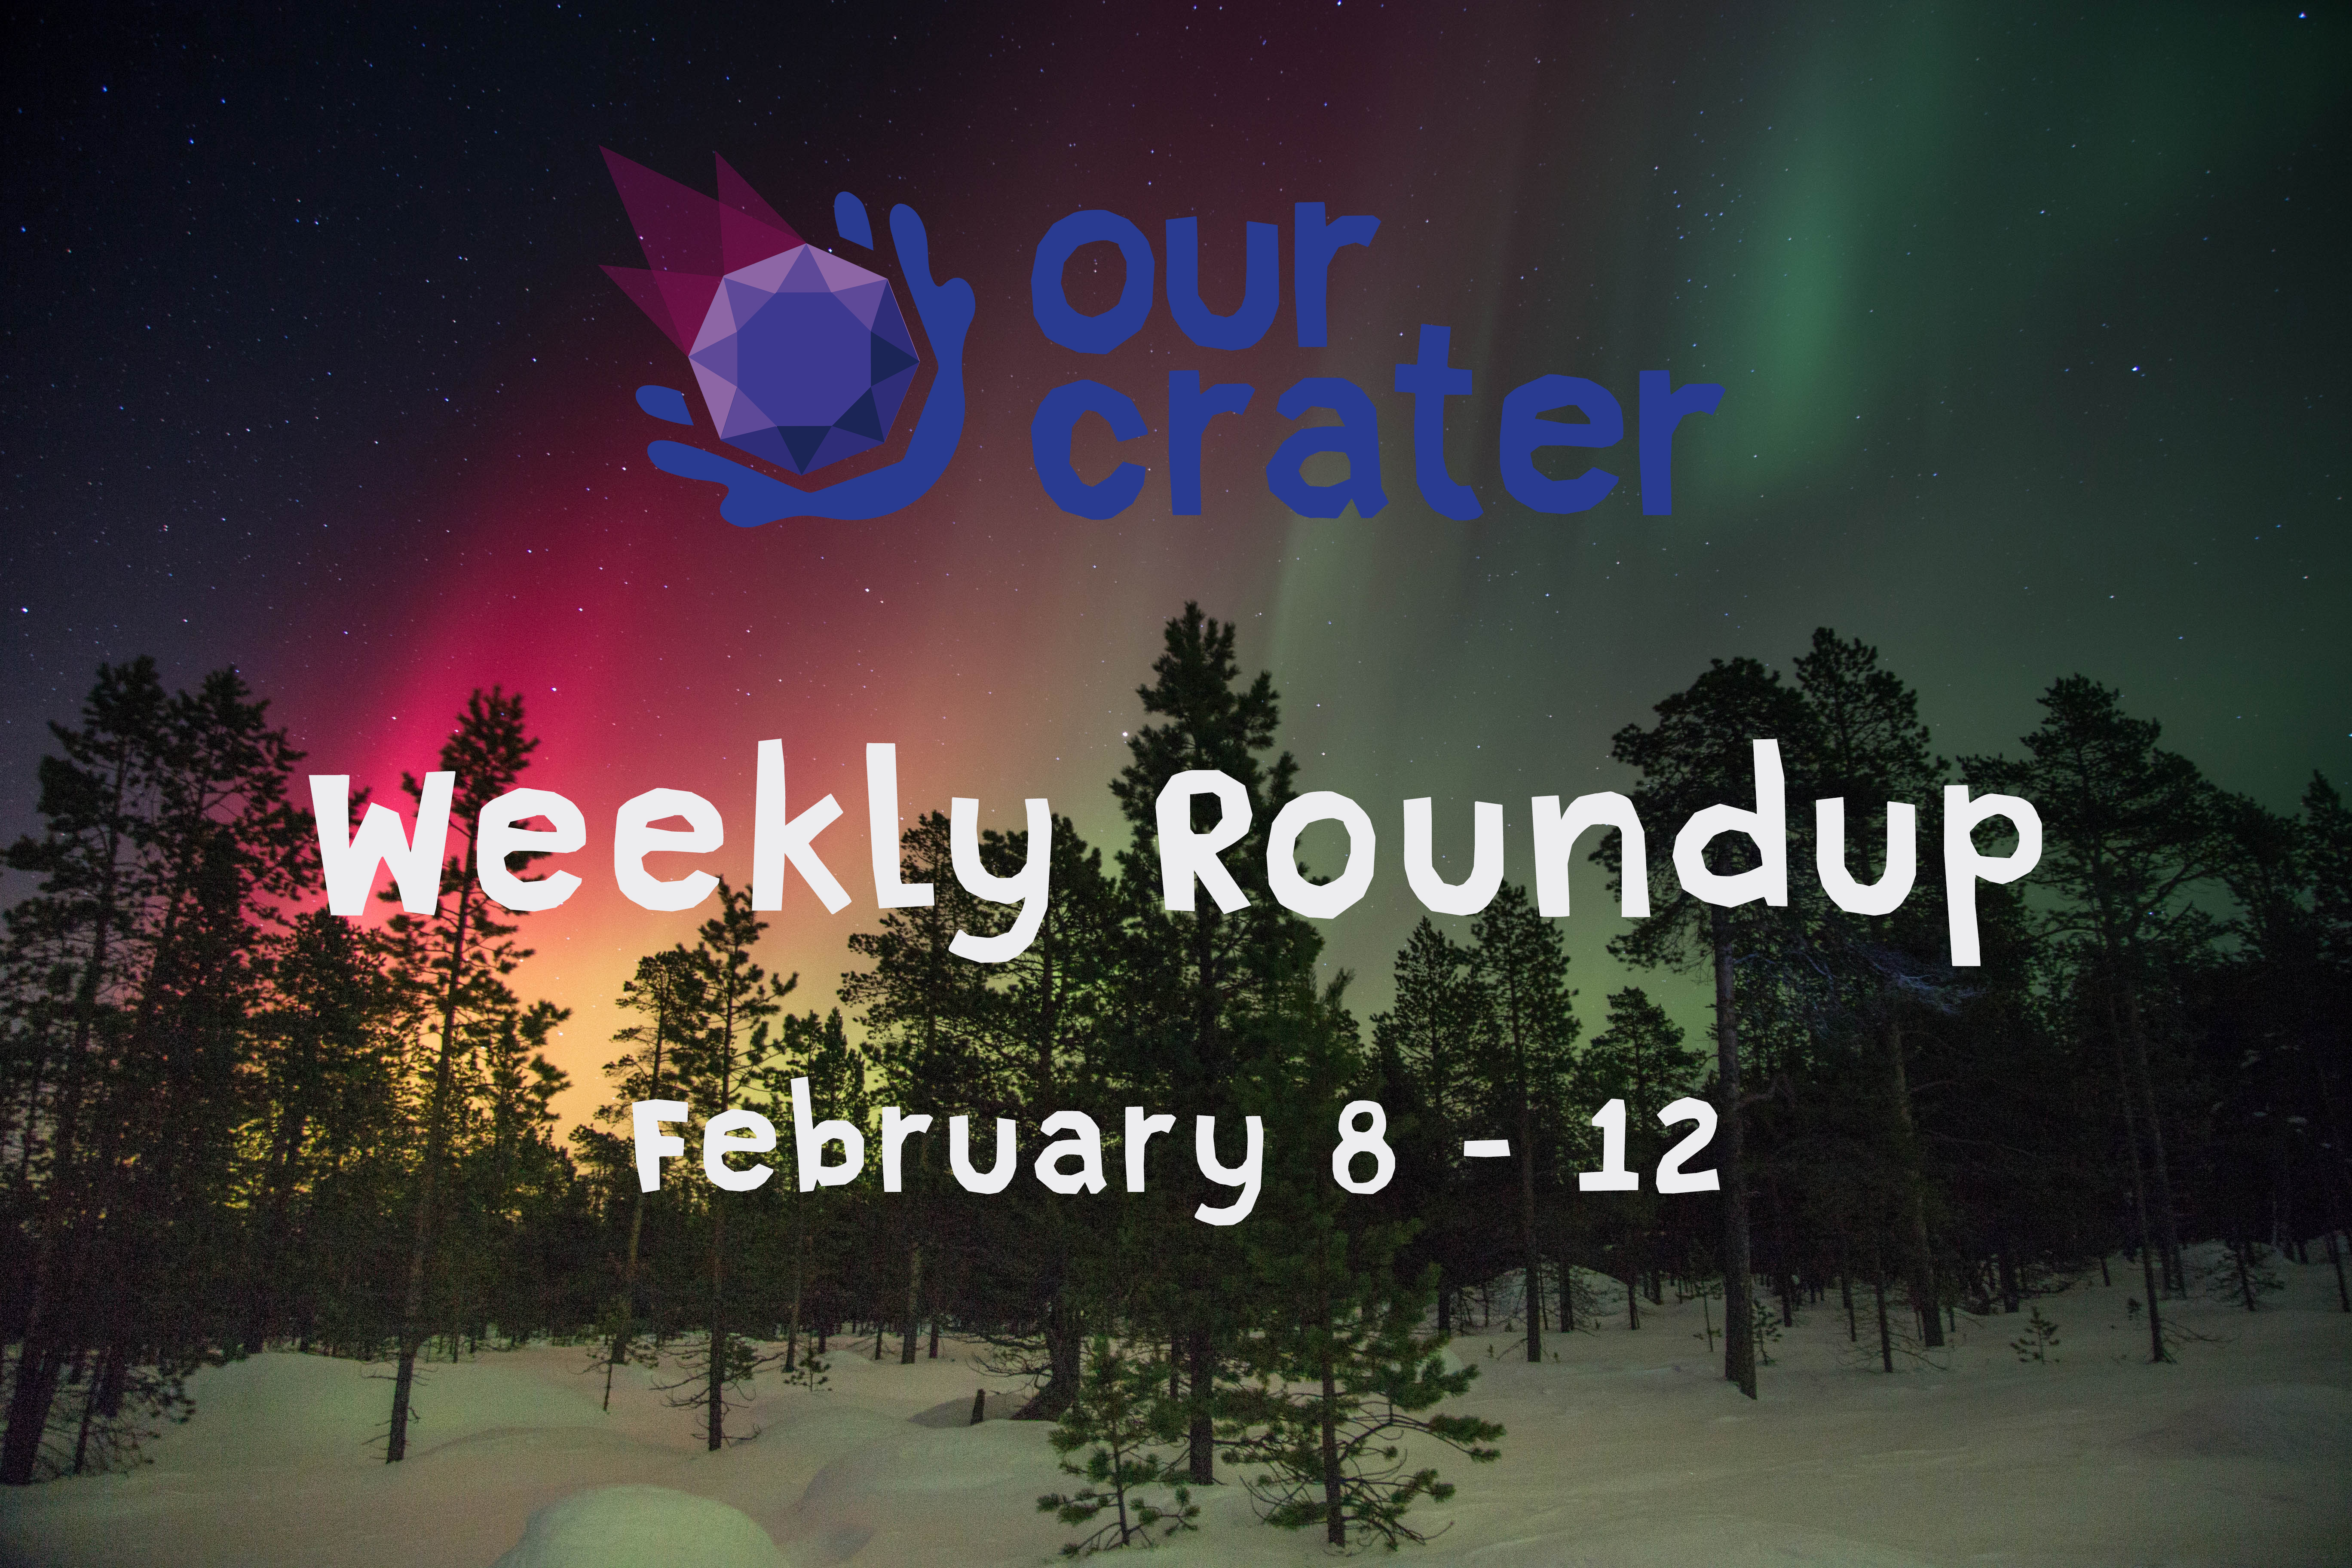 Weekly Roundup: February 8 - 12